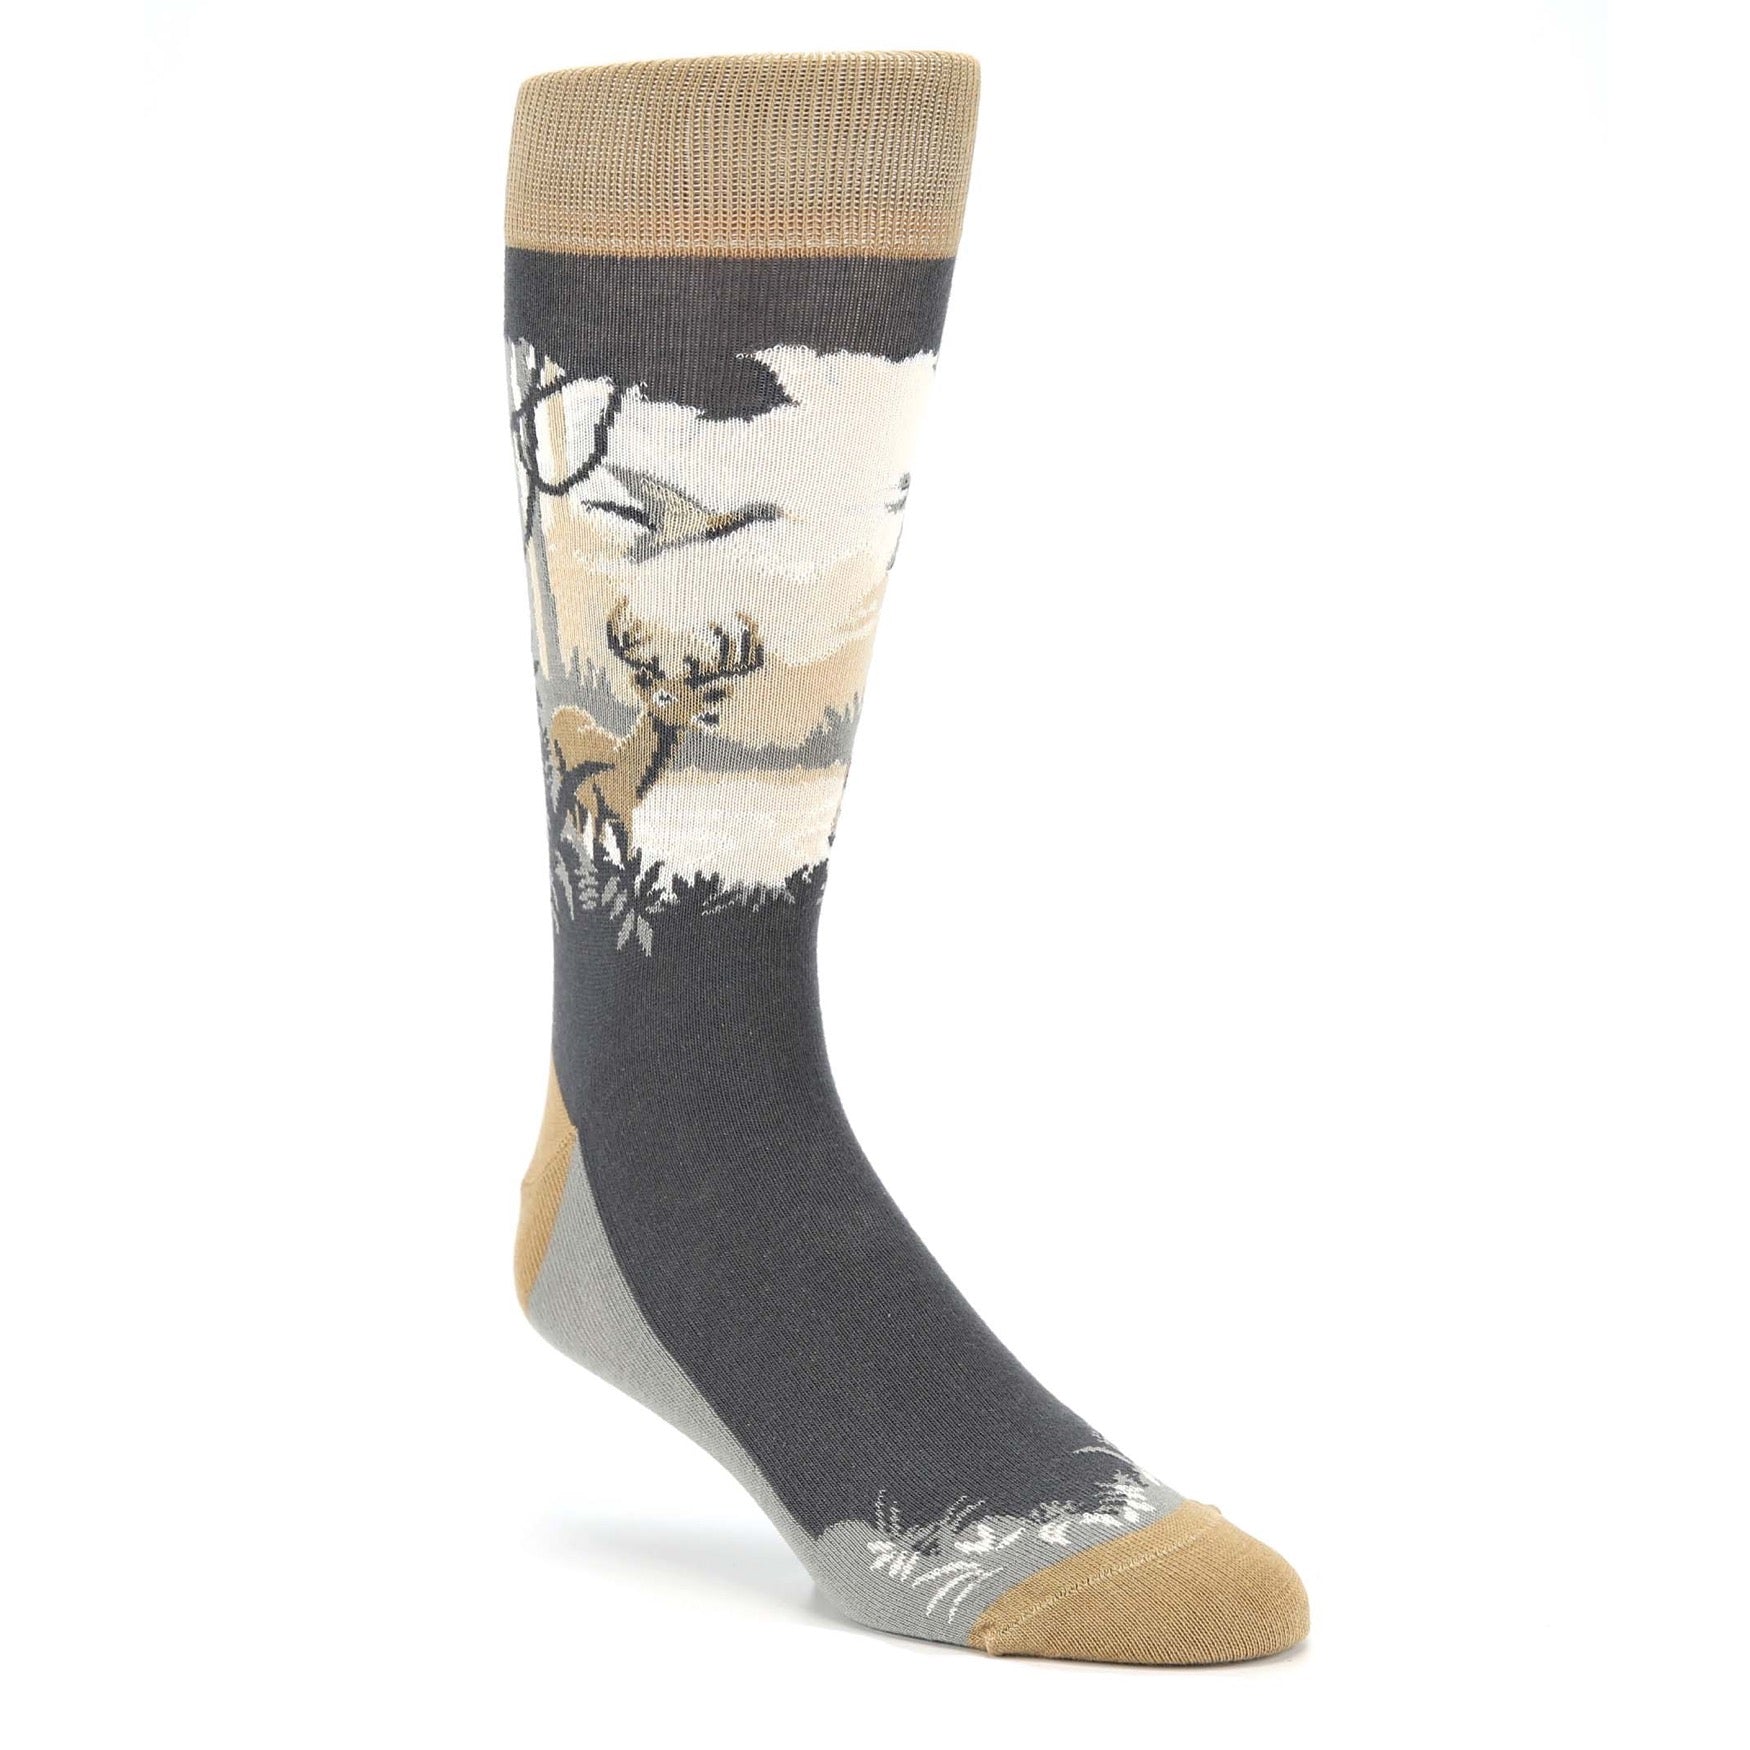 Hunting Socks - Tan and Gray Men's Novelty Dress Socks